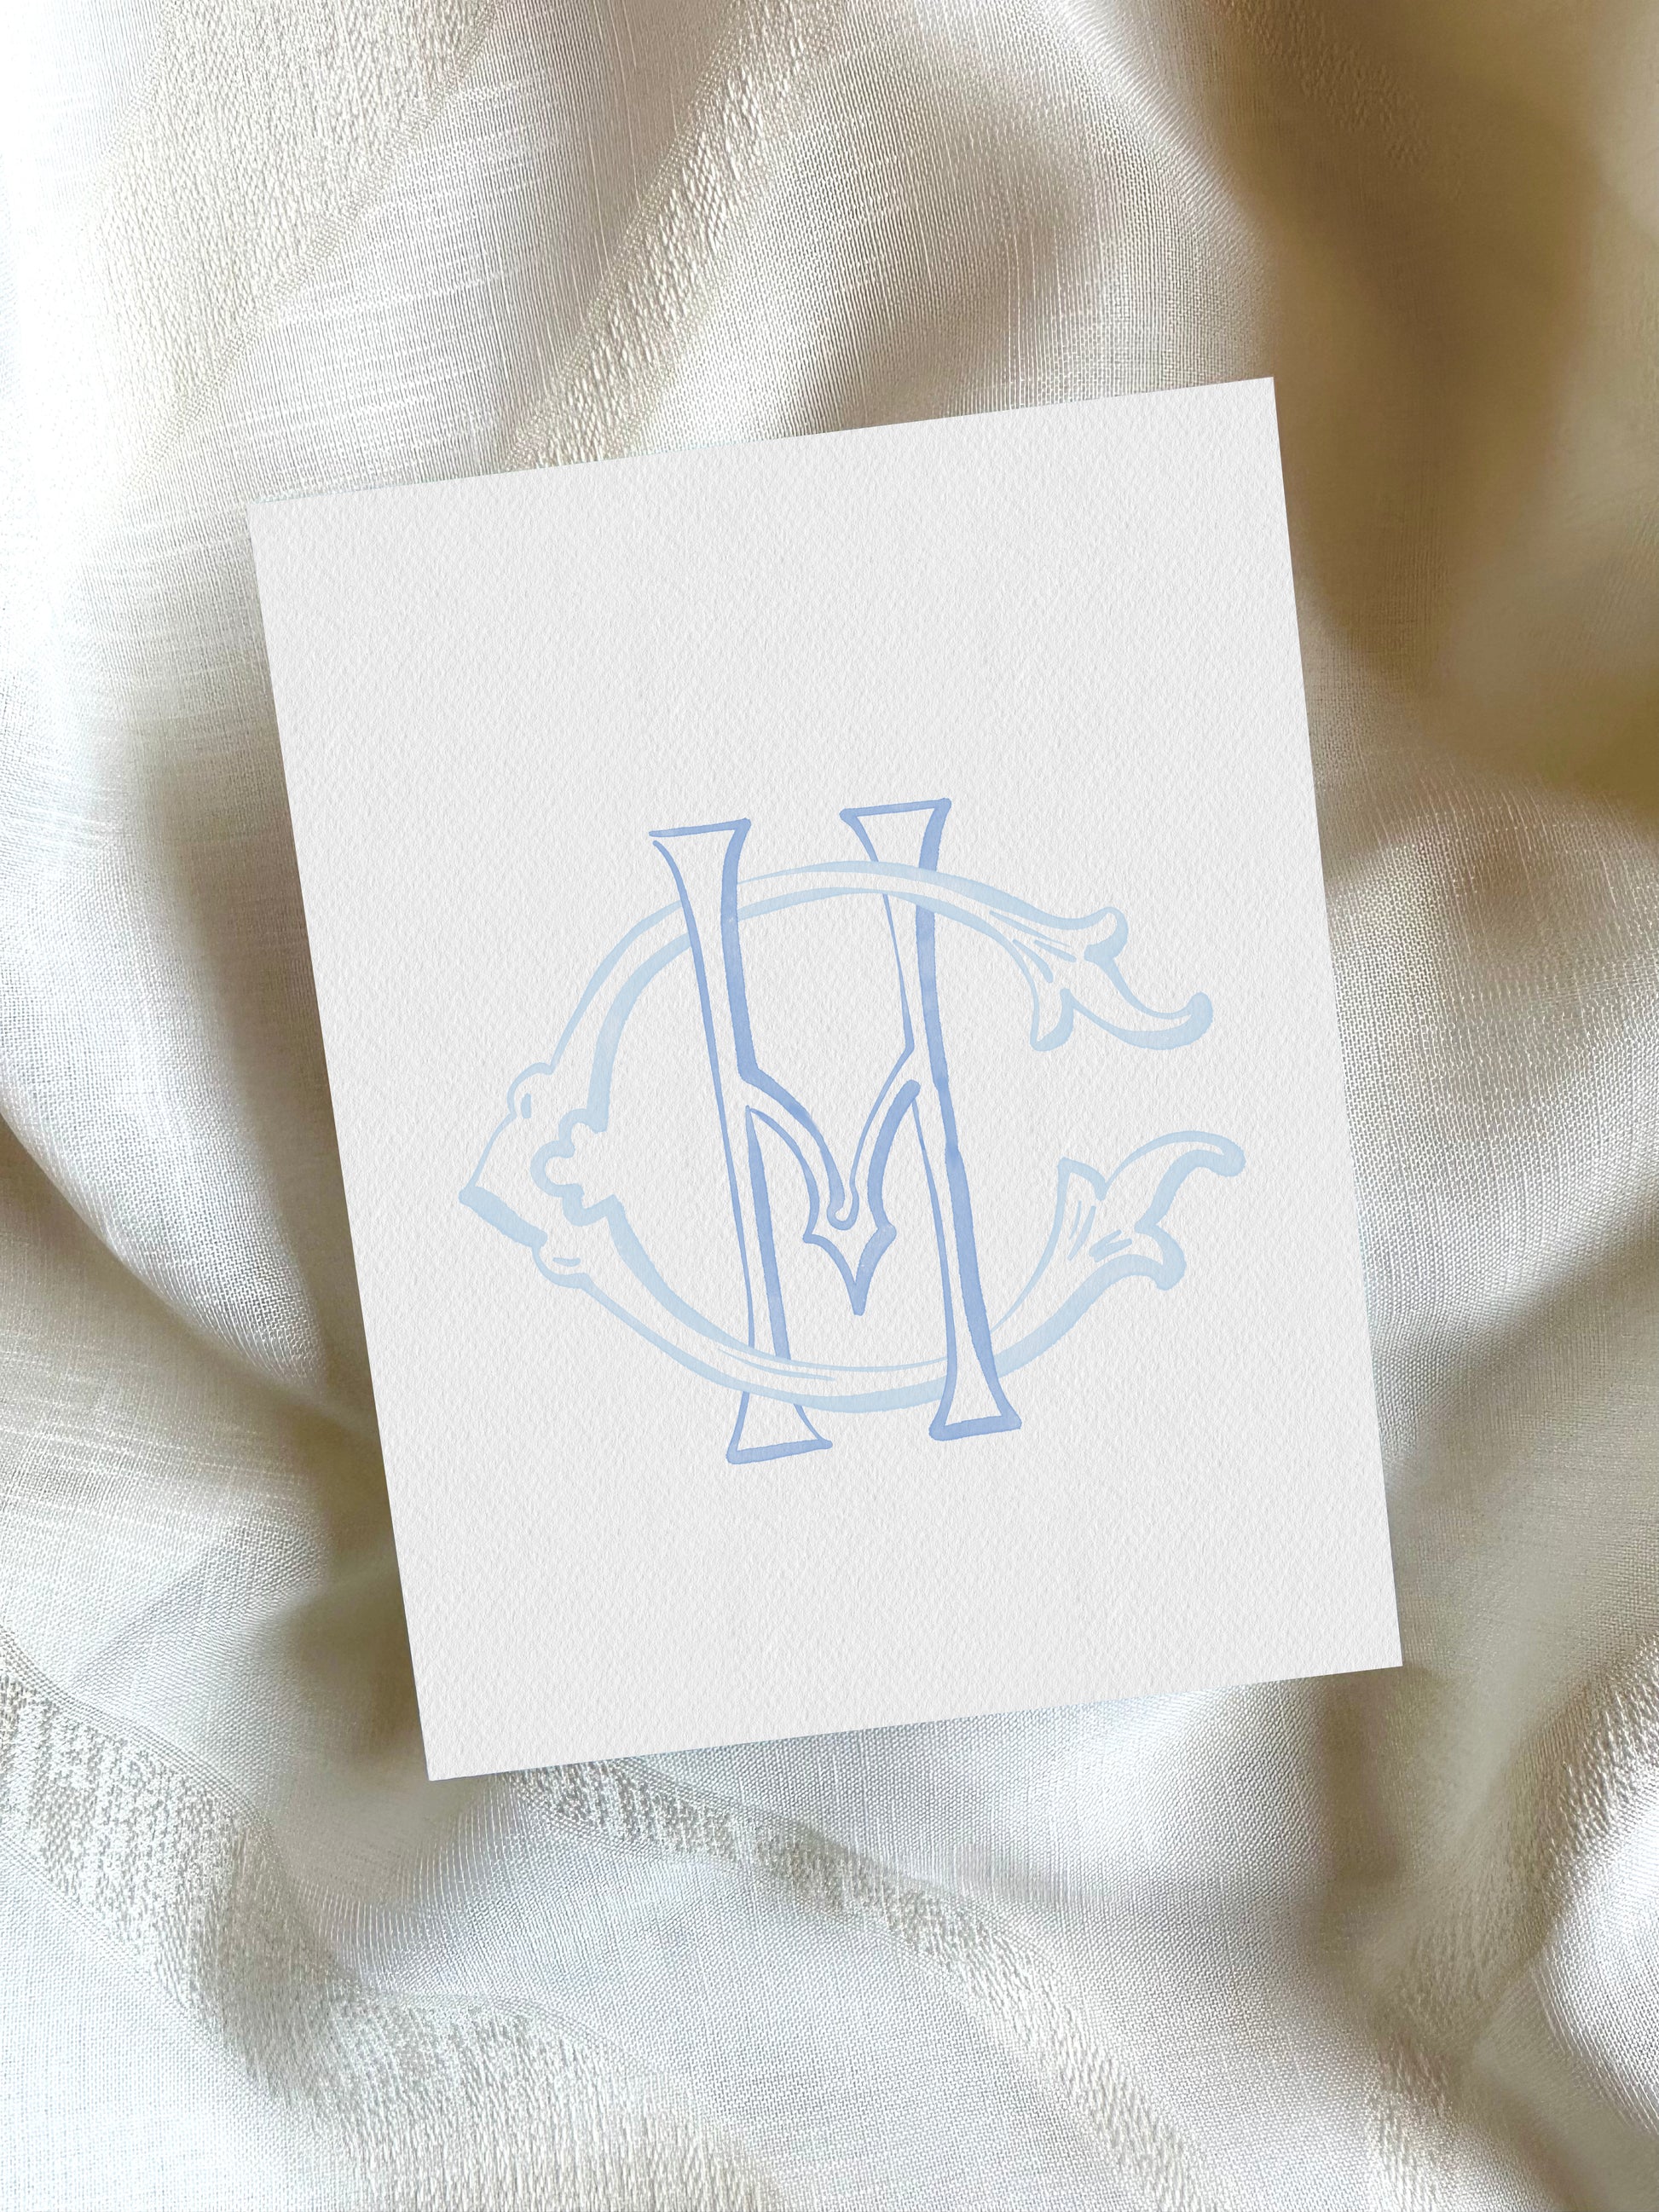 2 Letter Monogram with Letters CH HC | Digital Download - Wedding Monogram SVG, Personal Logo, Wedding Logo for Wedding Invitations The Wedding Crest Lab